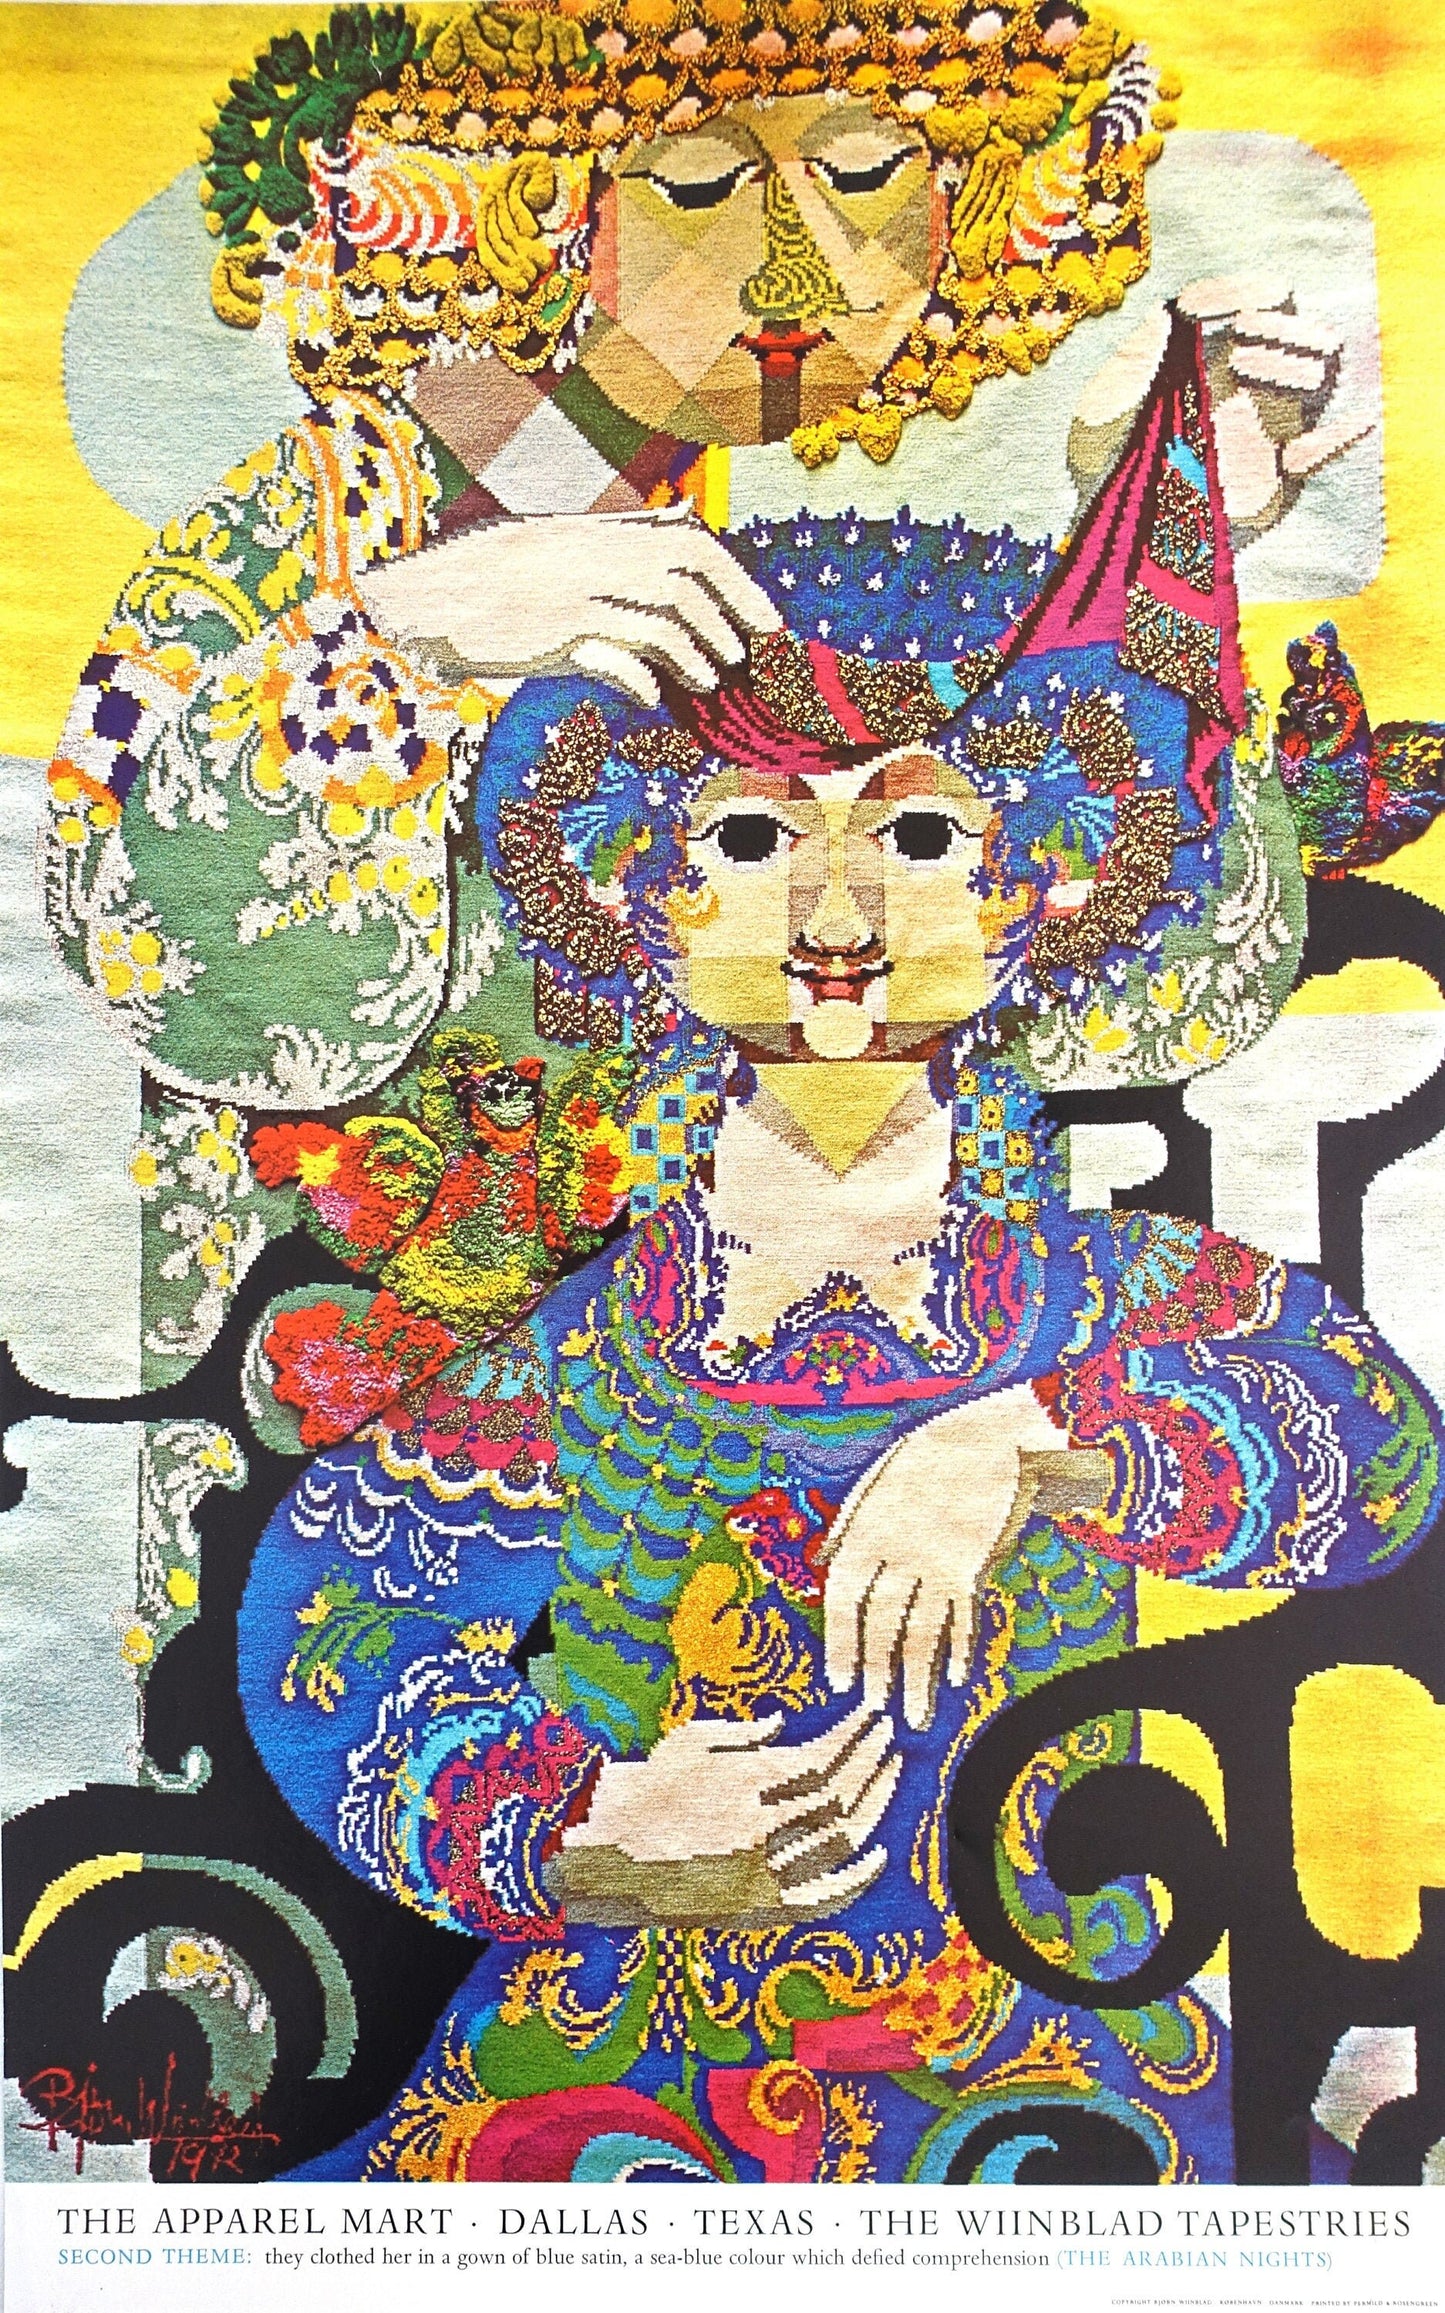 1972 The Wiinblad Tapestries - The Arabian Nights (Second Theme) - Original Vintage Poster